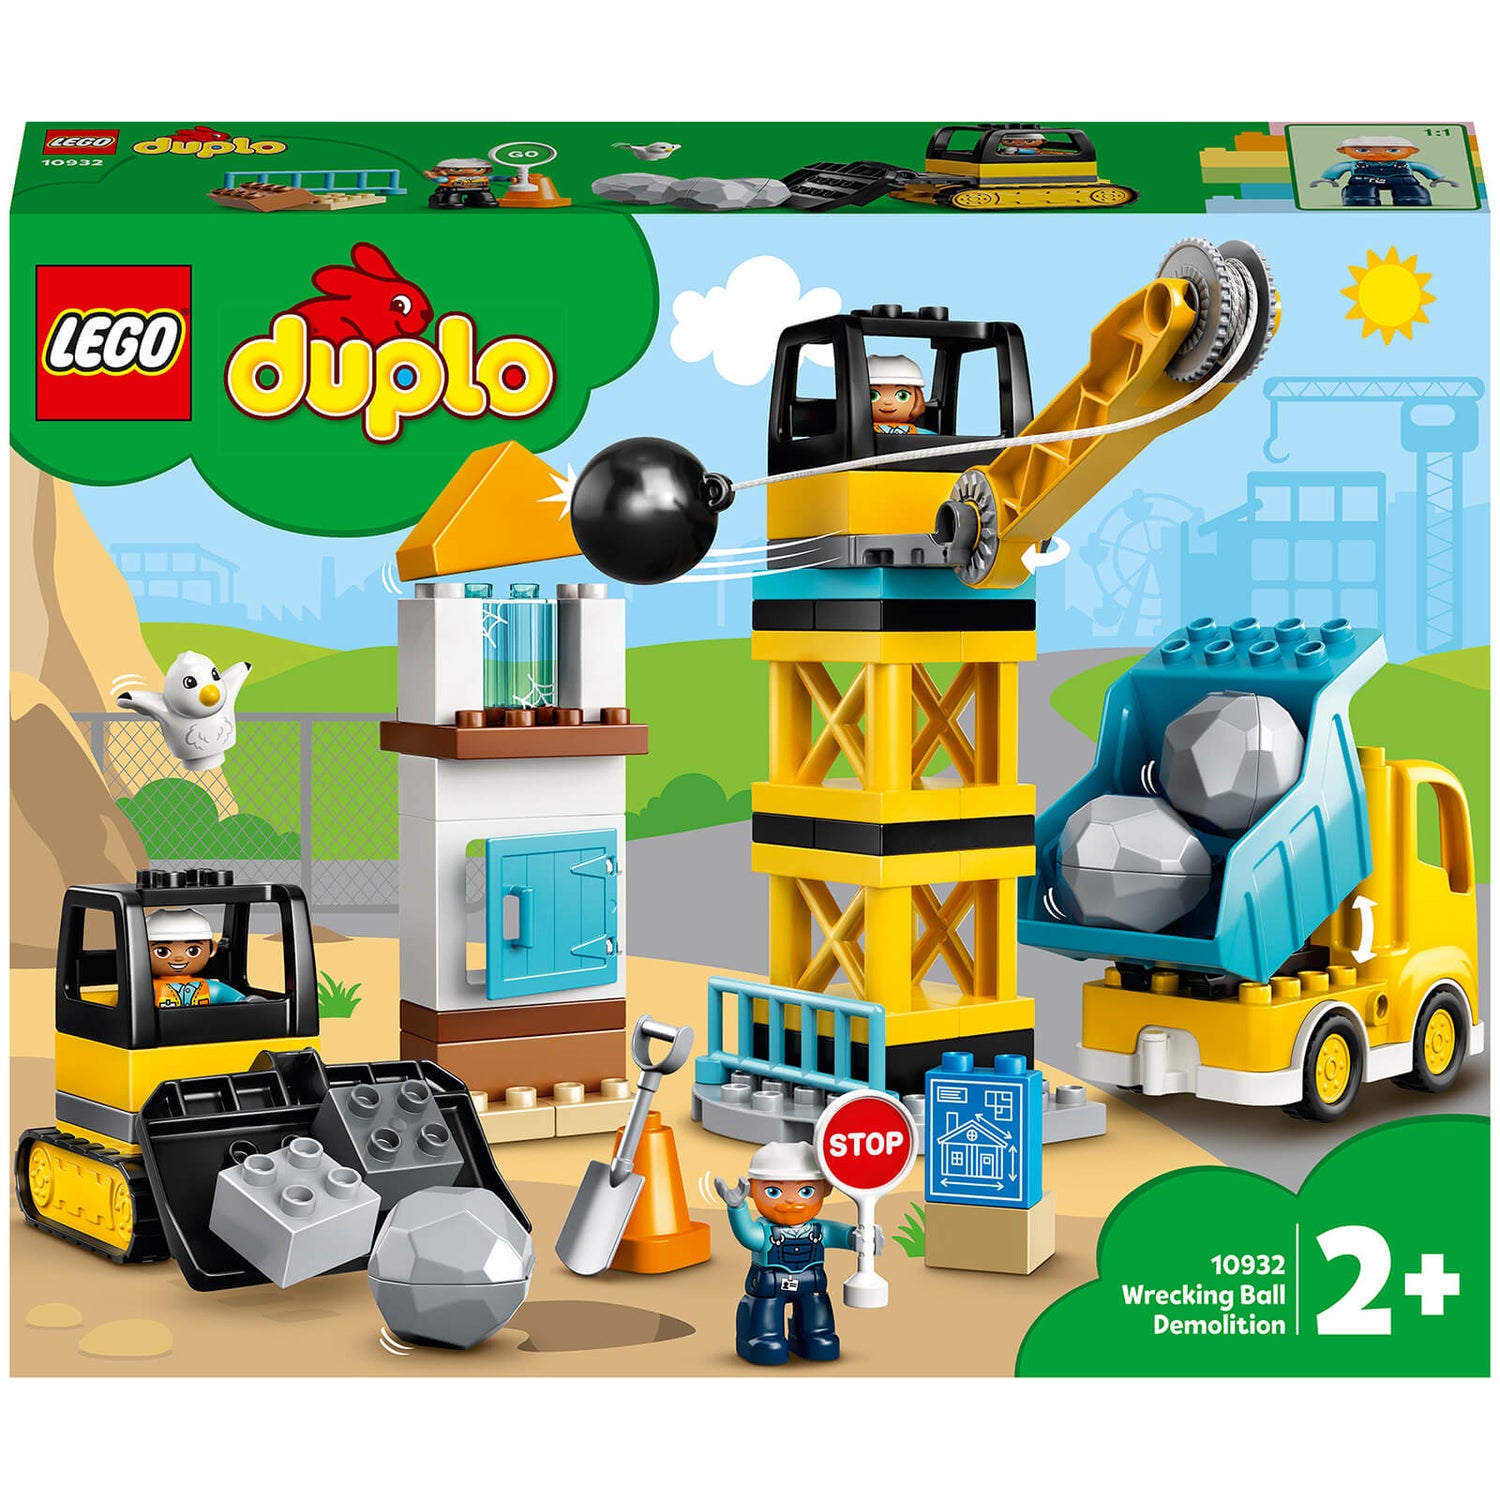 Jong werkgelegenheid compact LEGO DUPLO Wrecking Ball Demolition Construction Set (10932) Toys - Zavvi US